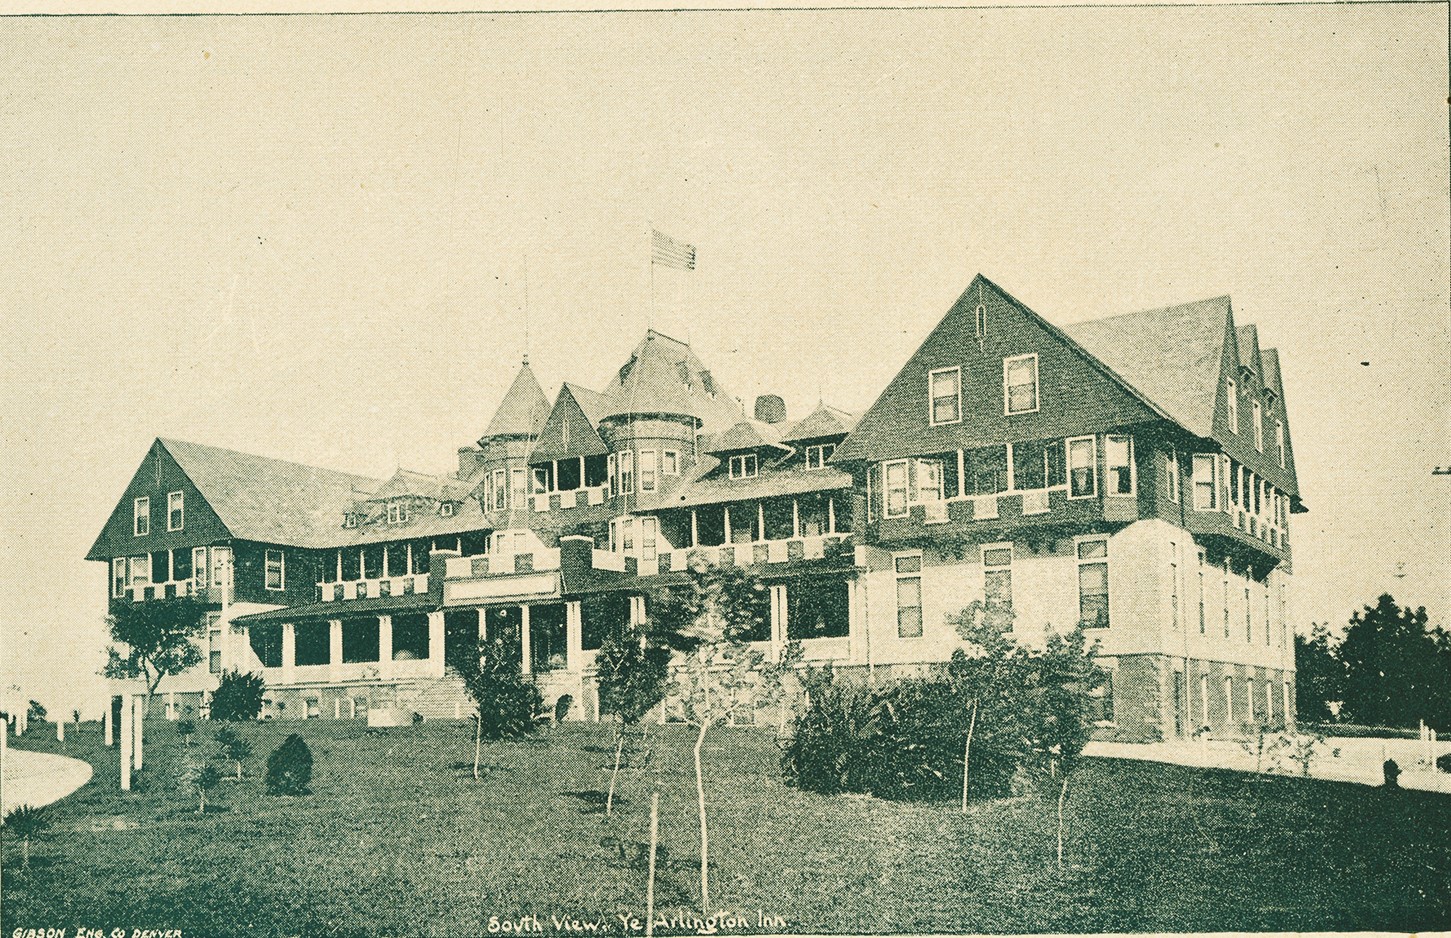 Ye Arlington Inn, a large 3 story hotel, 1892-1893